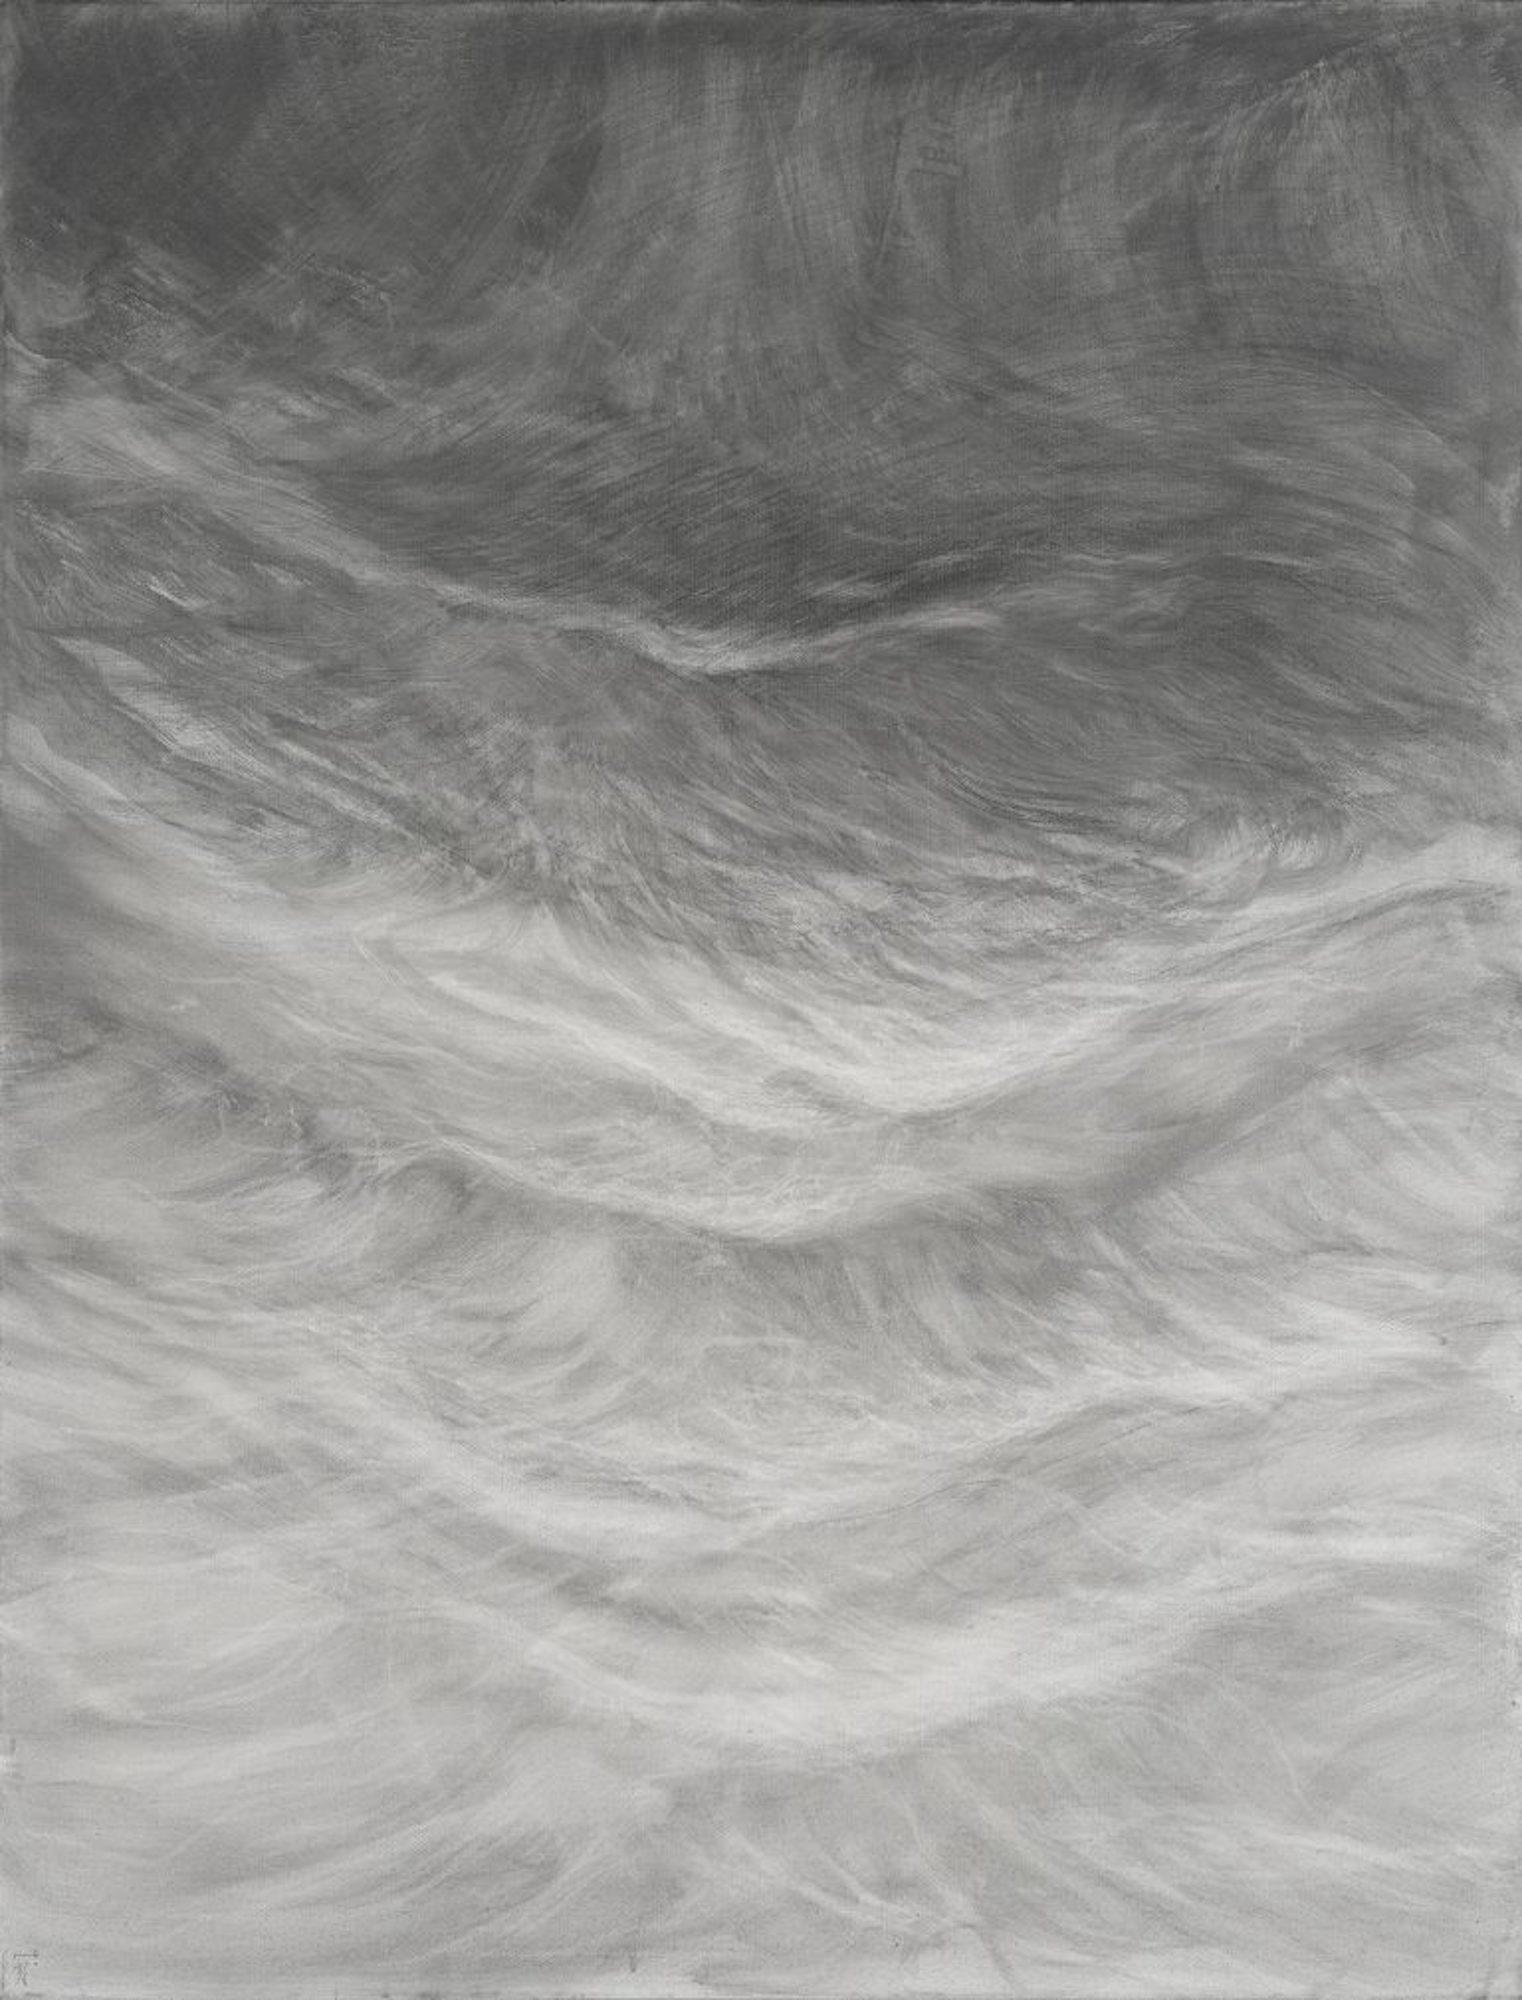 Waves by Franco Salas Borquez - Contemporary seascape painting, ocean, dark tone For Sale 8